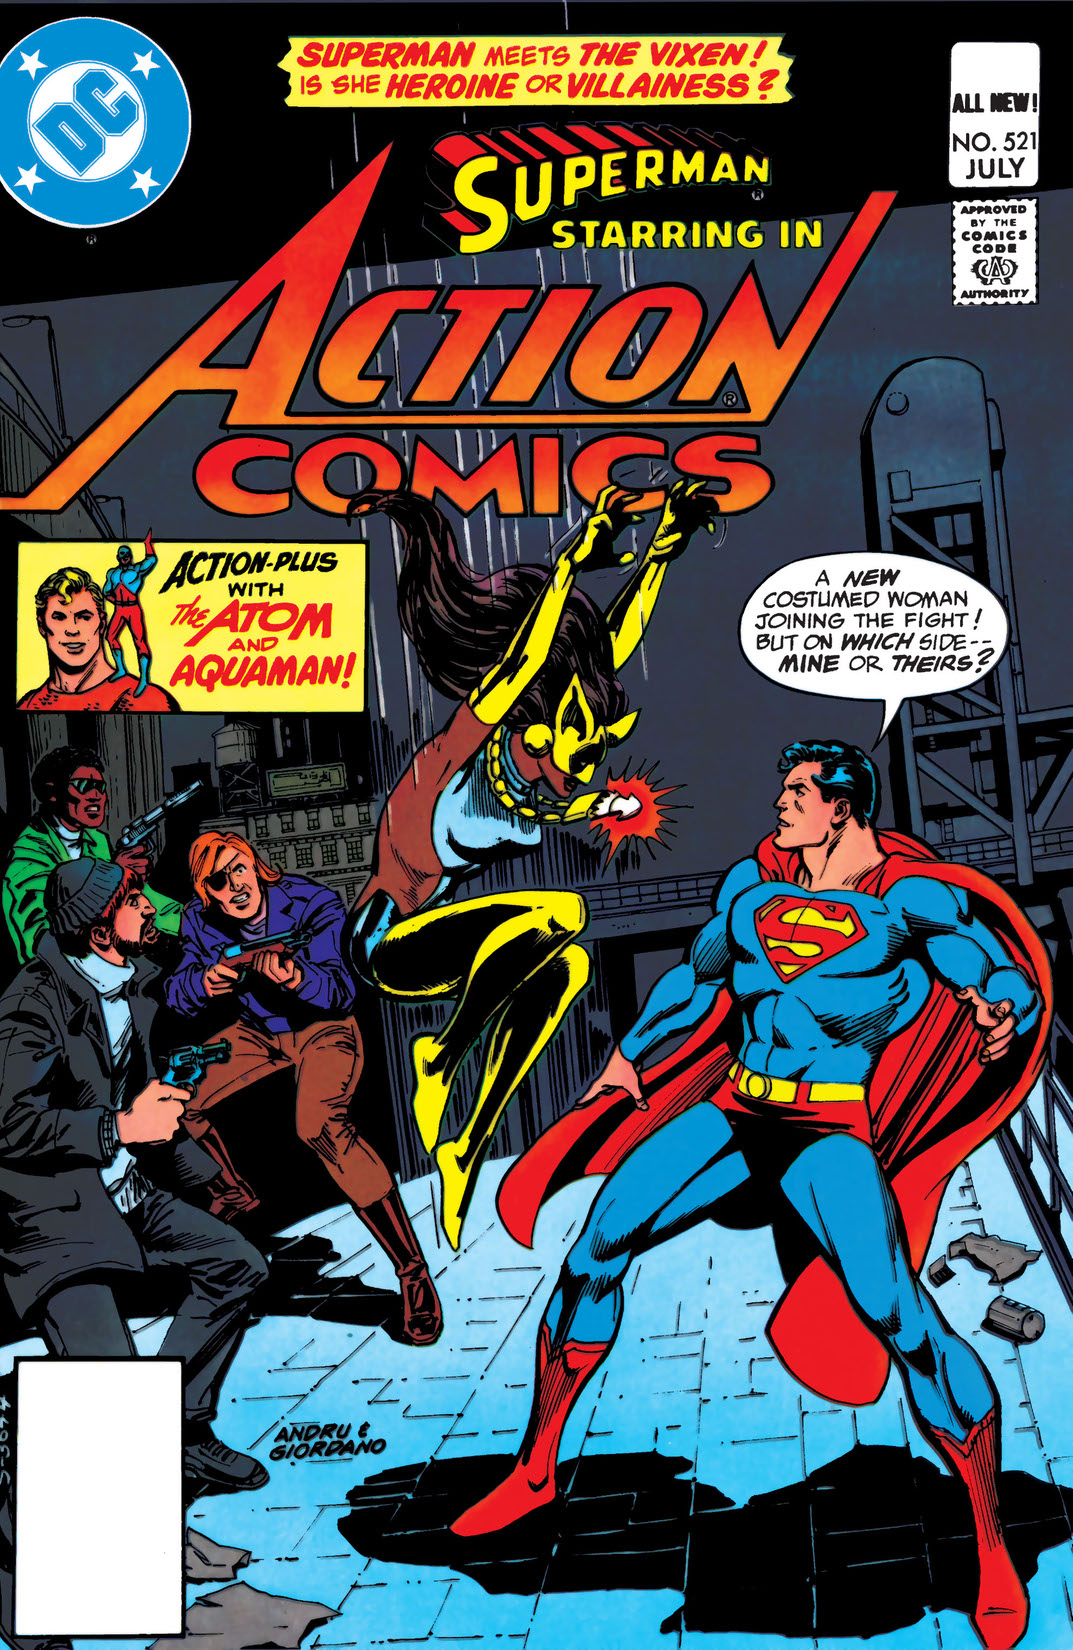 Action Comics (1938-) #521 preview images